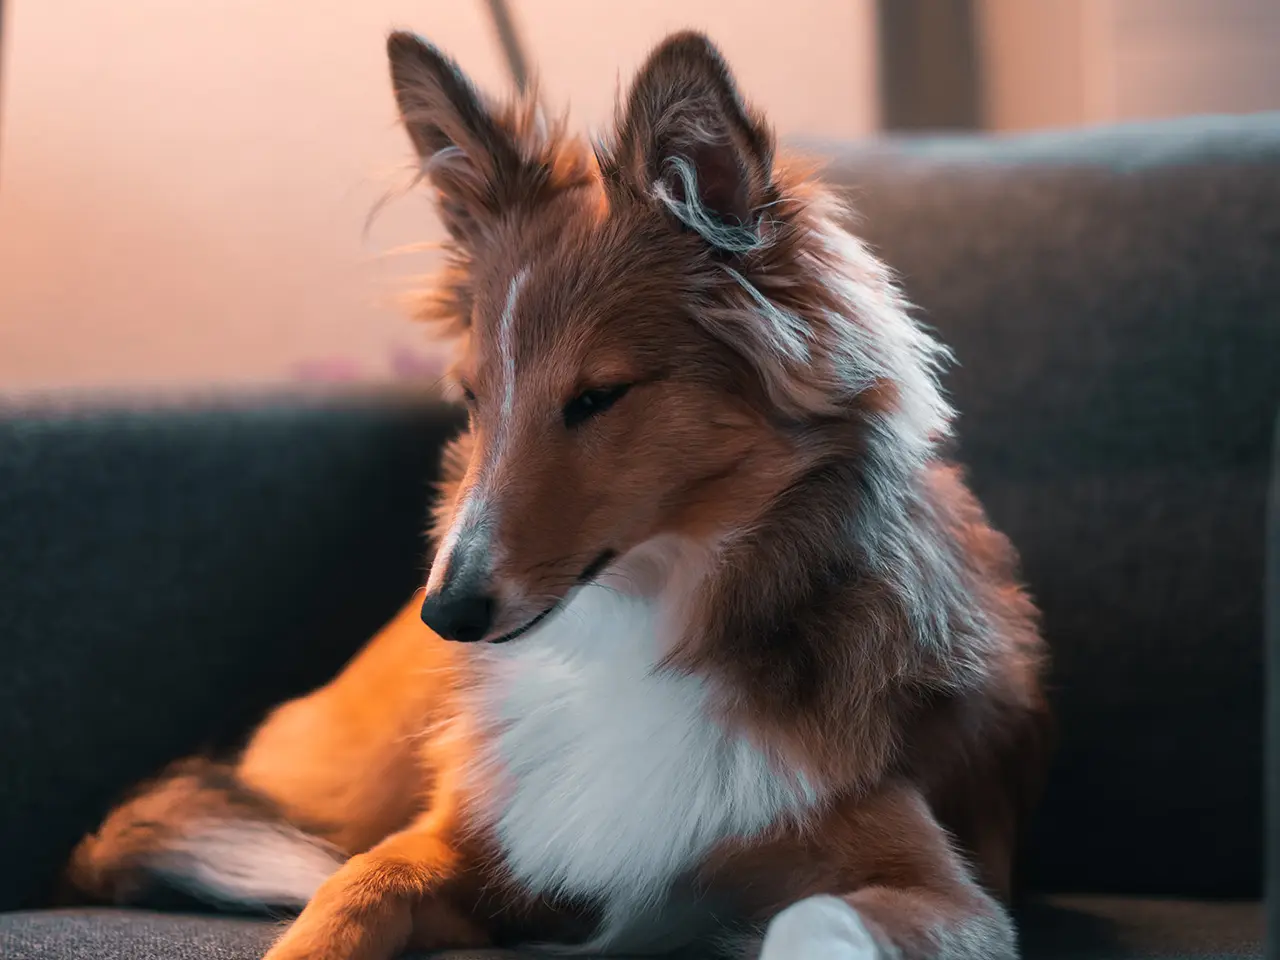 Medium dog on a couch